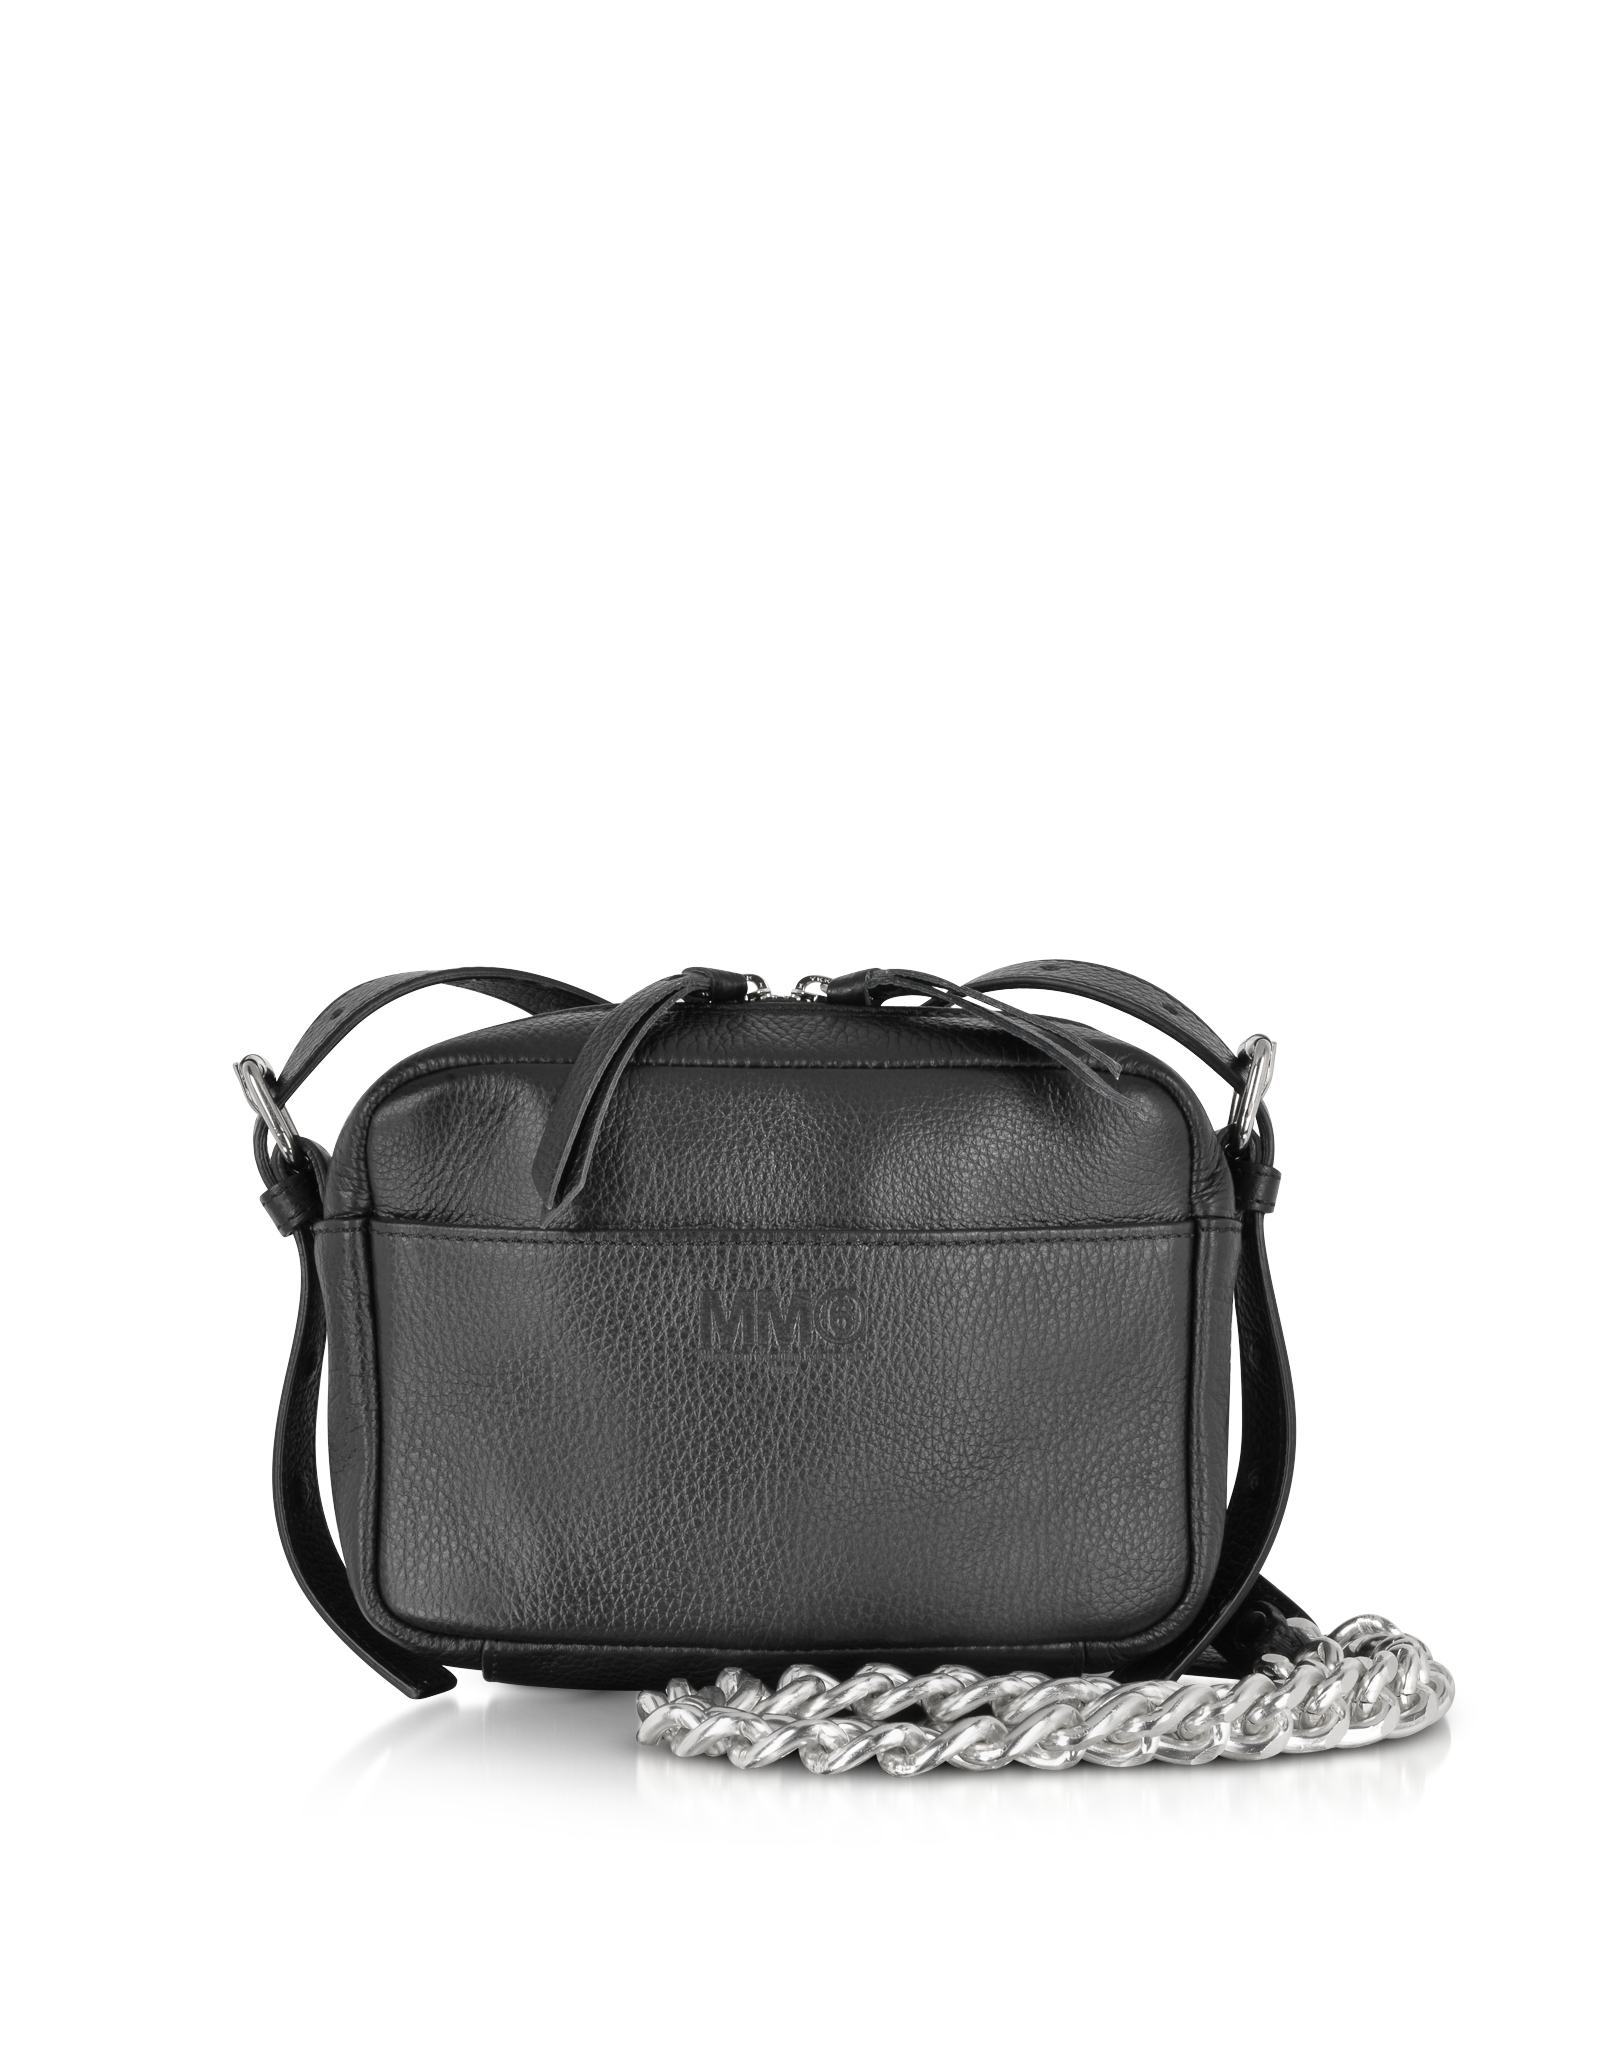 Lyst - Mm6 By Maison Martin Margiela Black Leather Small Crossbody Bag ...